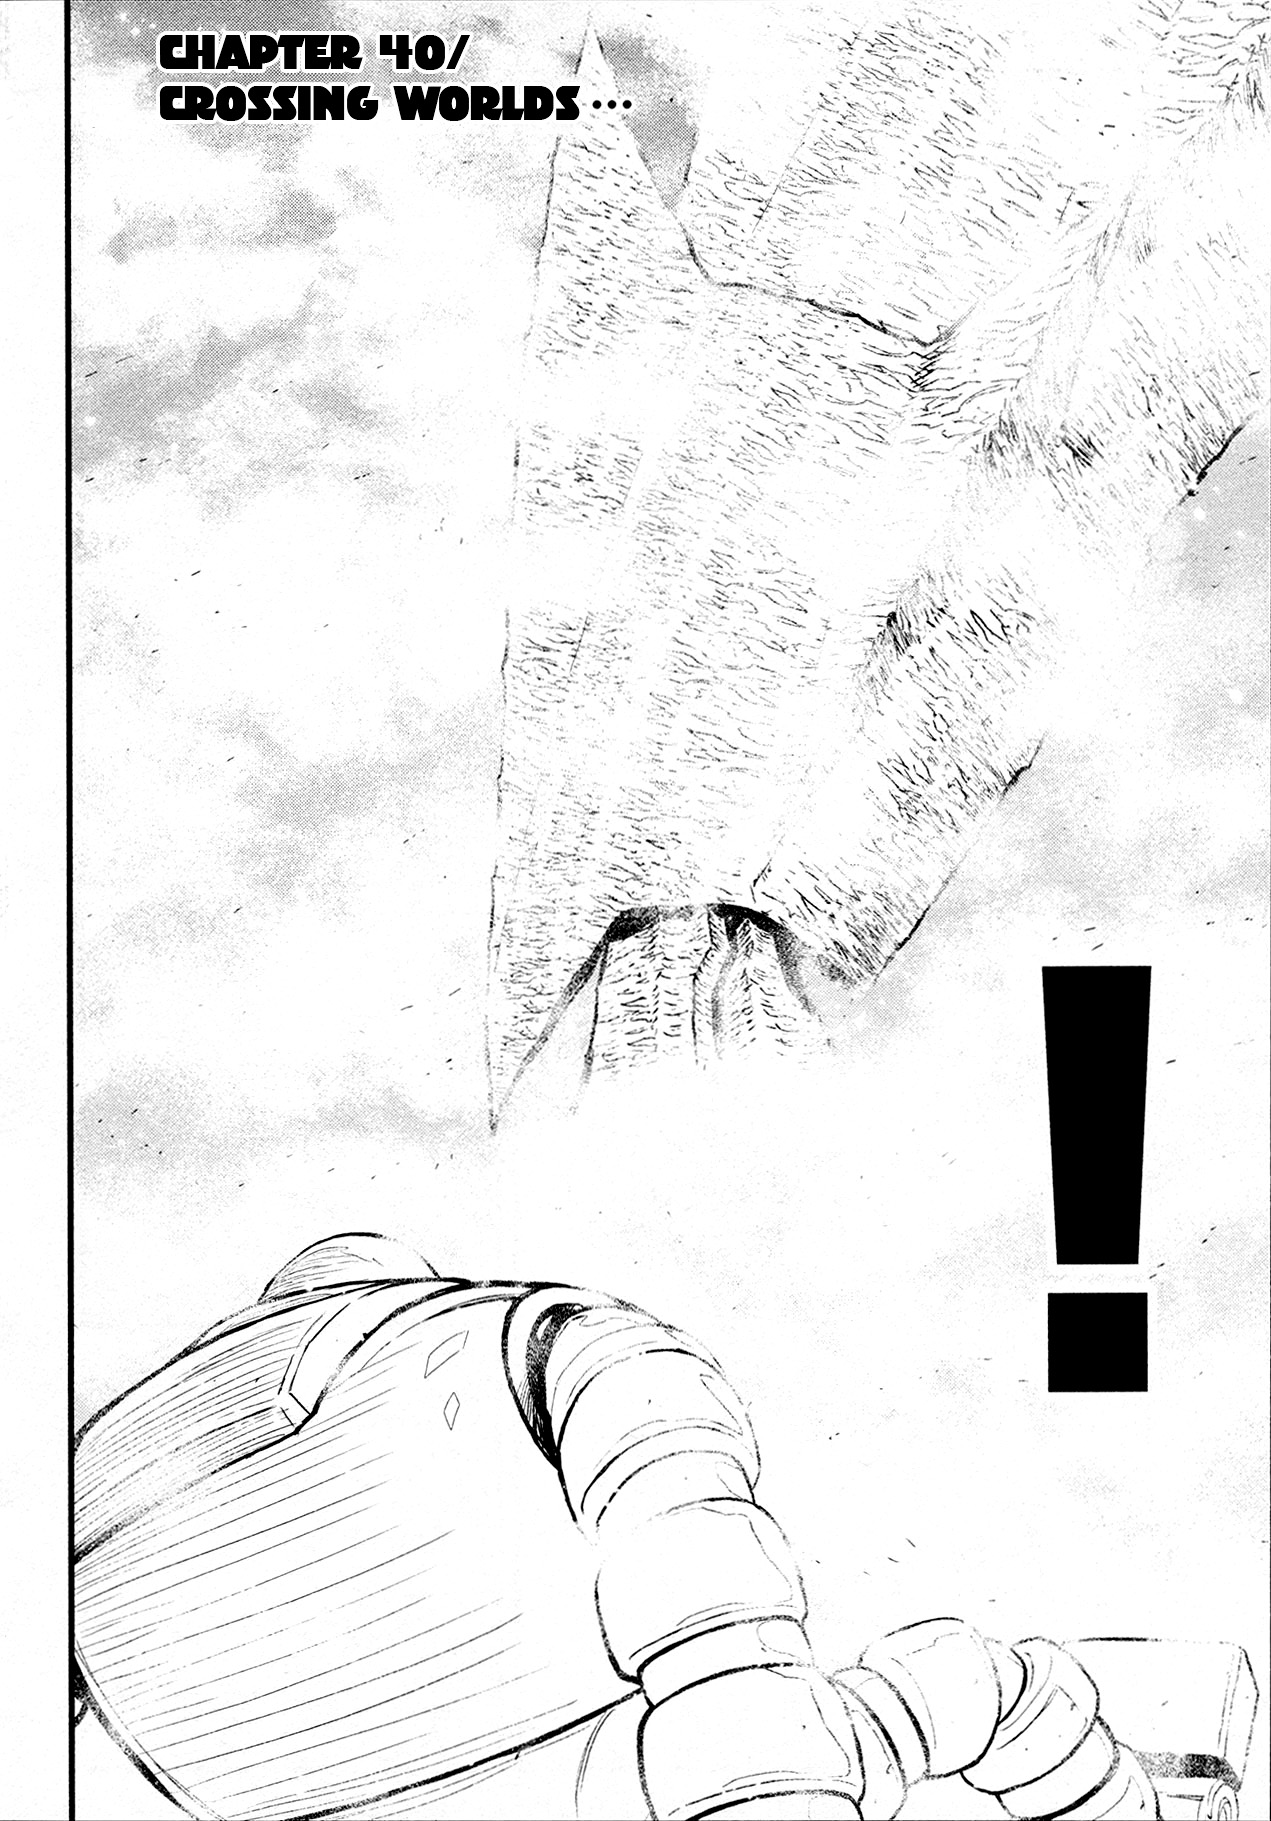 Shin Mazinger Zero Vol.9 Chapter 40: Crossing Worlds ... - Picture 1